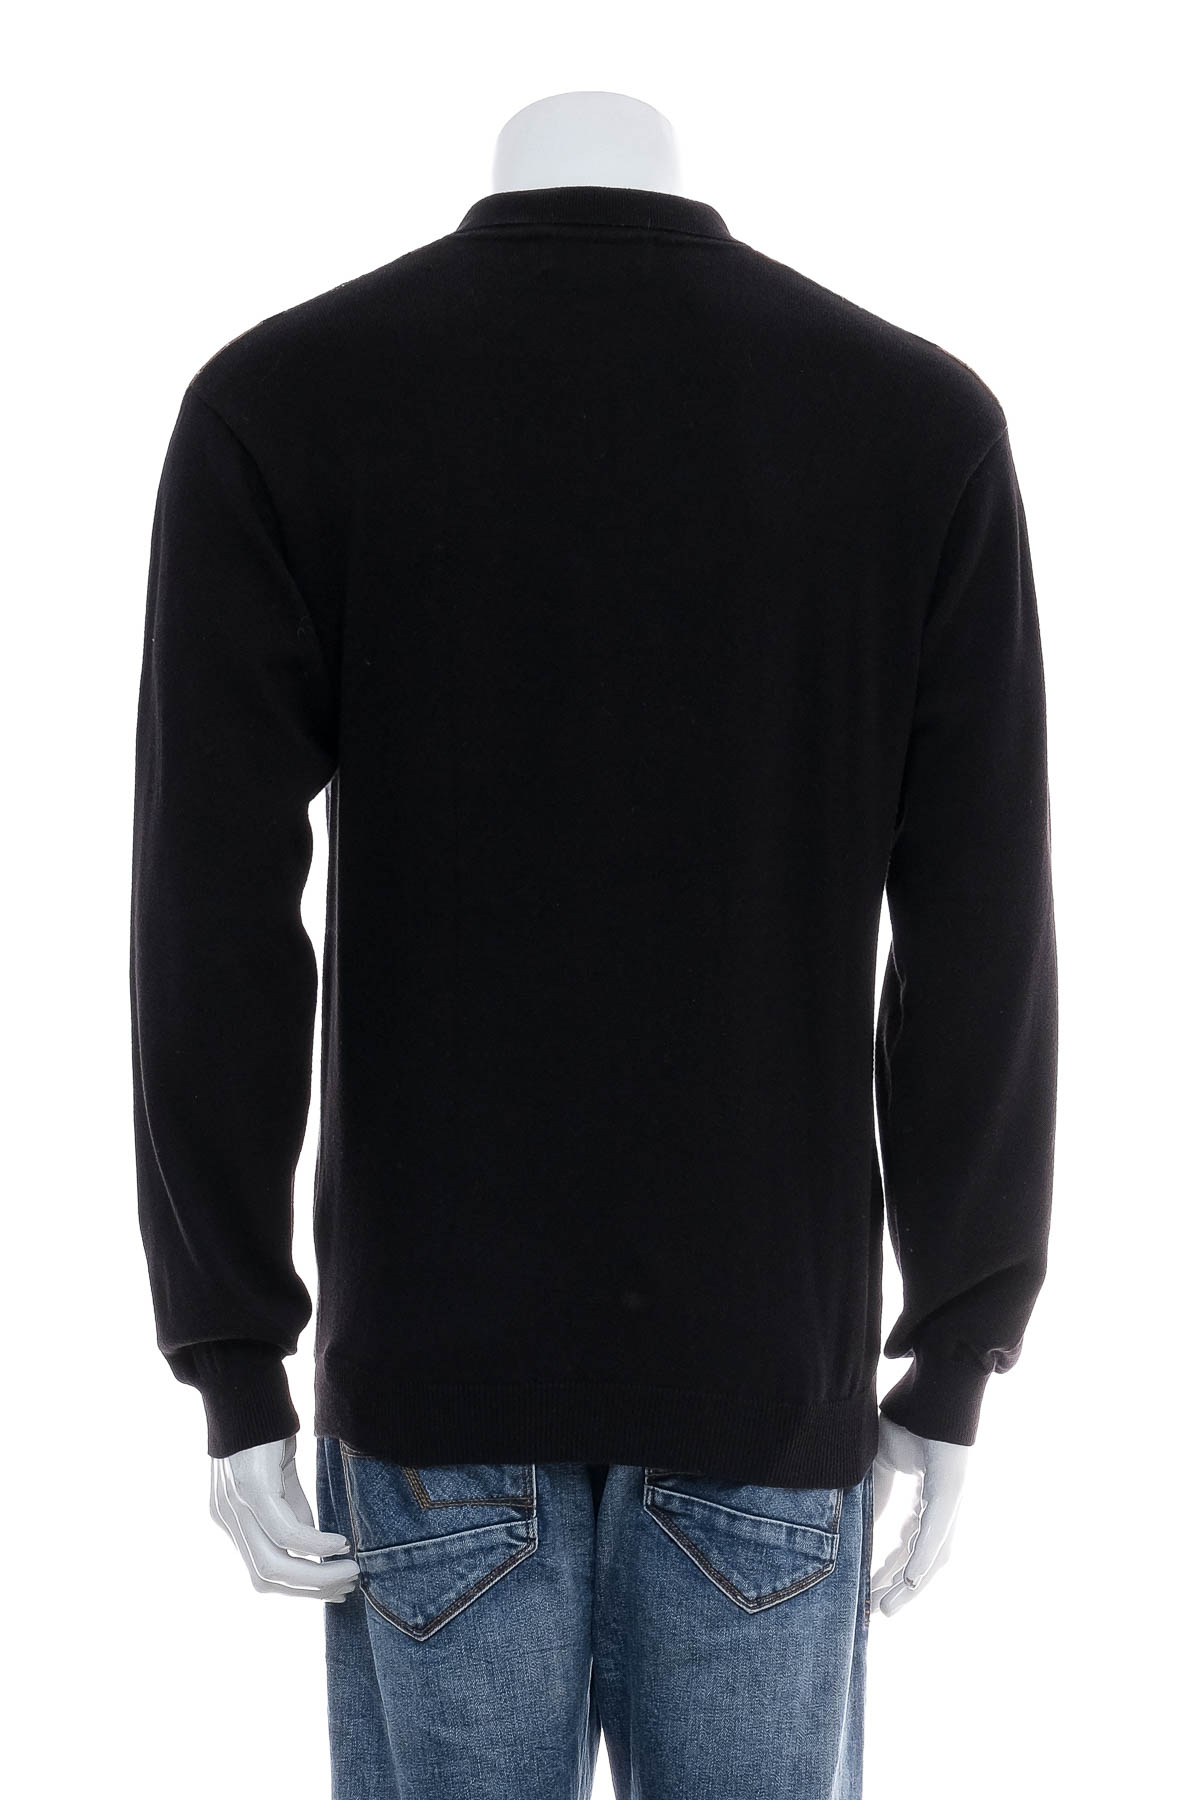 Men's sweater - Croft & Barrow - 1